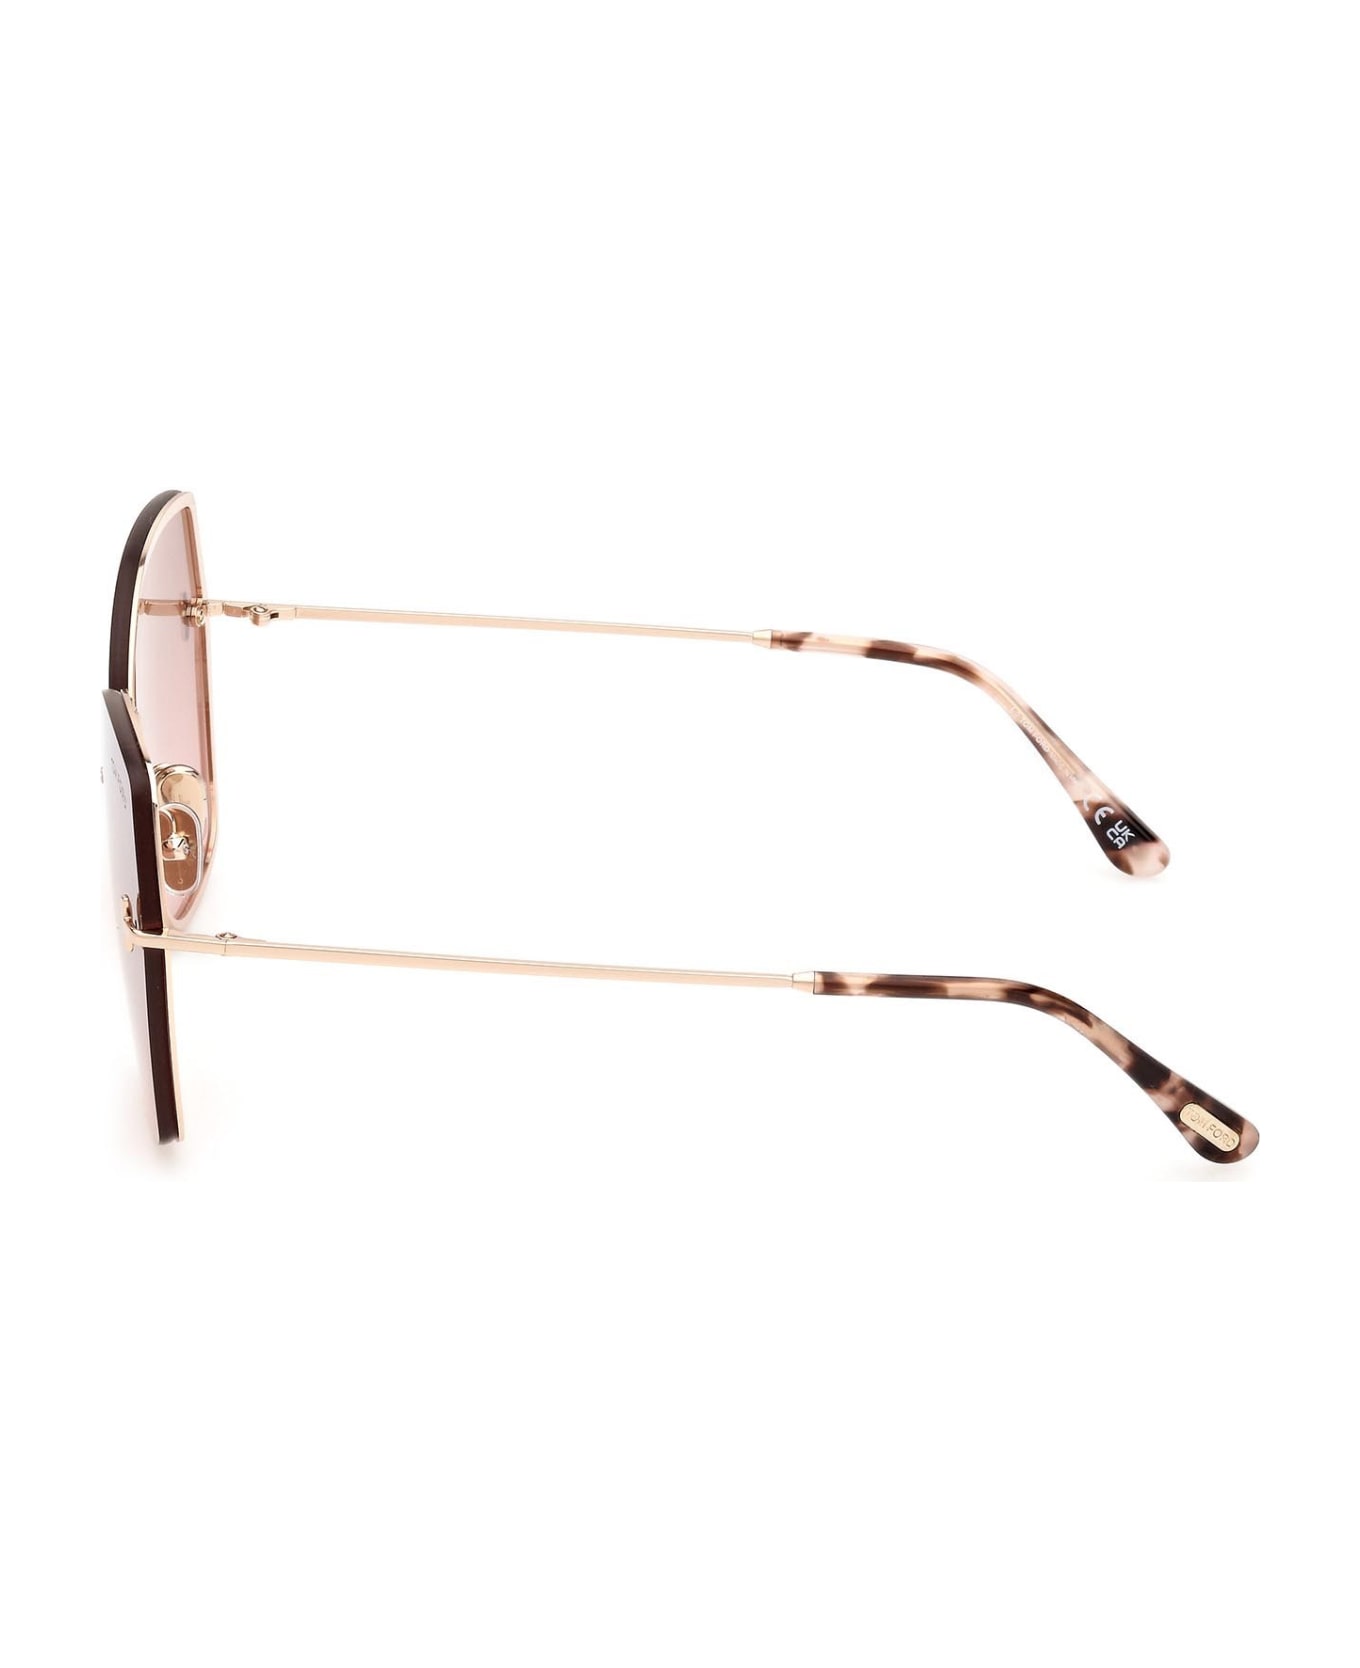 Tom Ford Eyewear Sunglasses - Rosa/Rosa